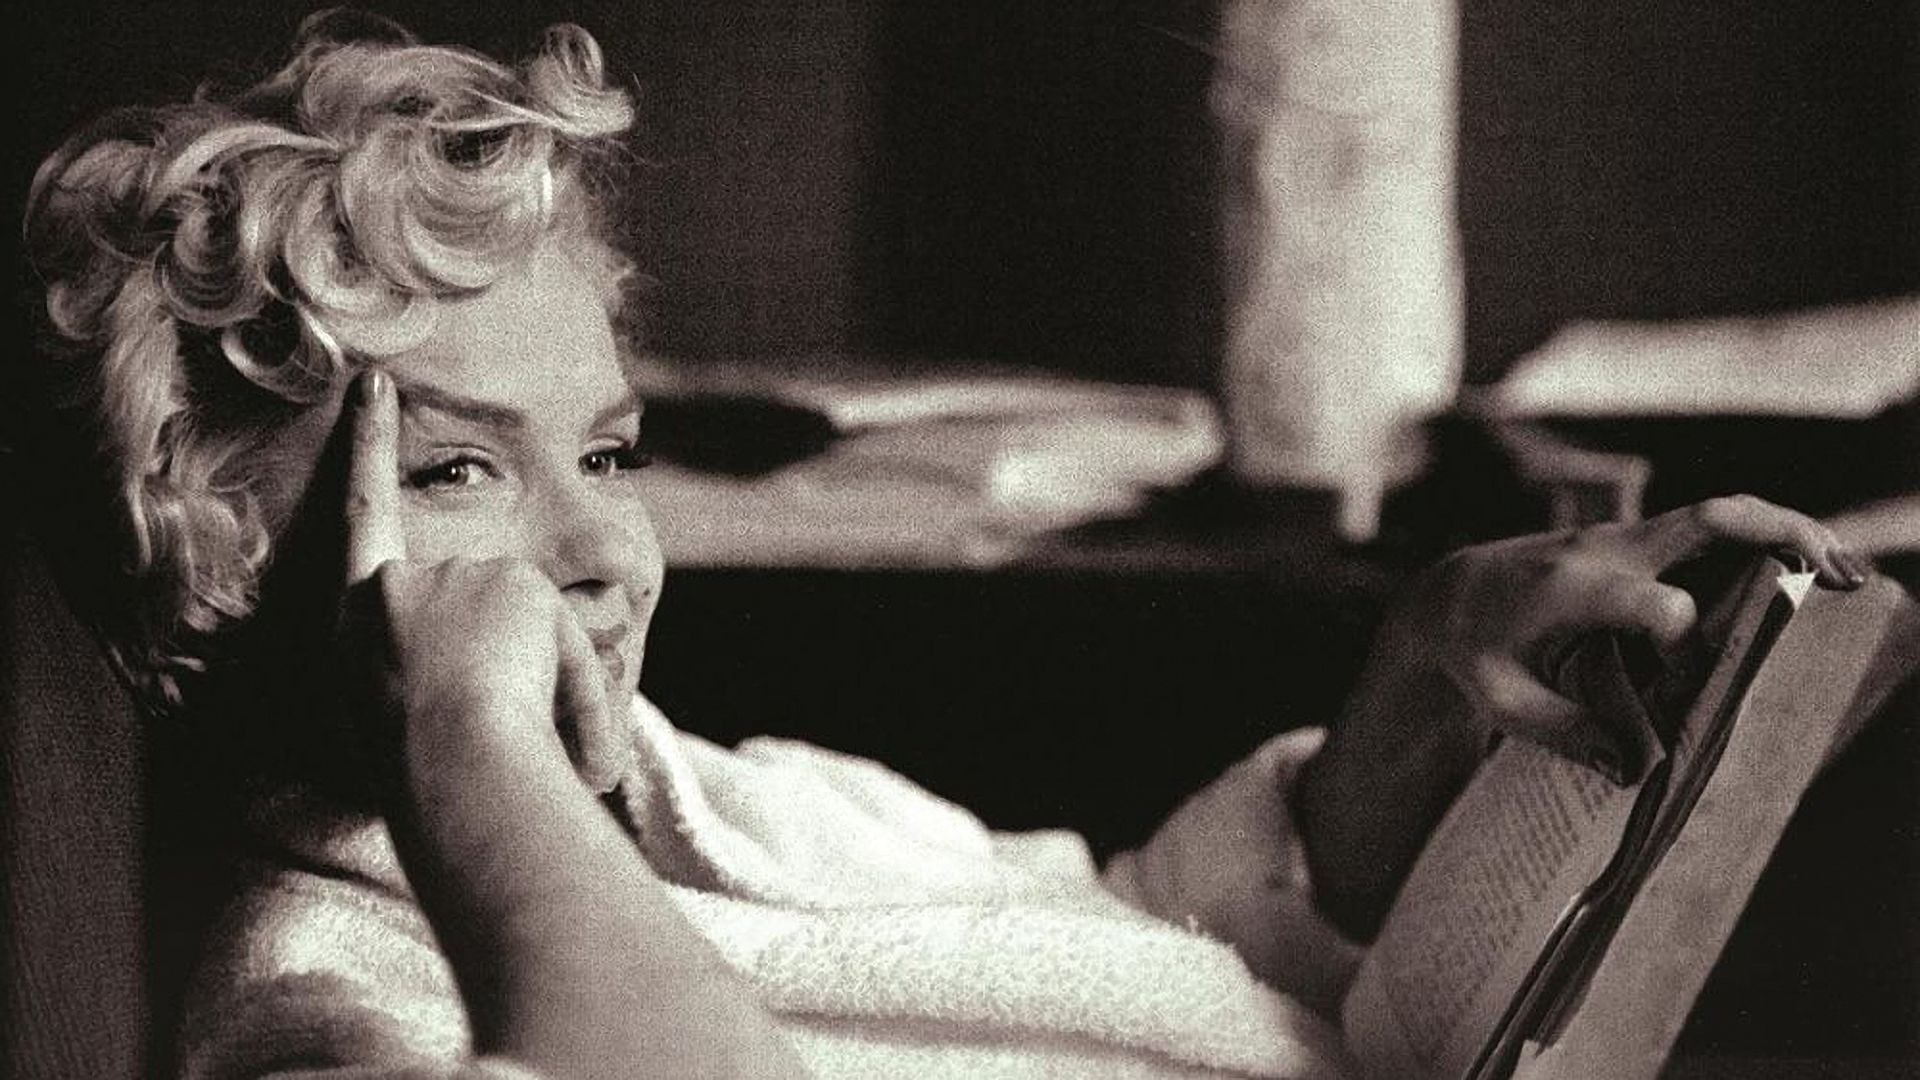 Love, Marilyn 2013 123movies